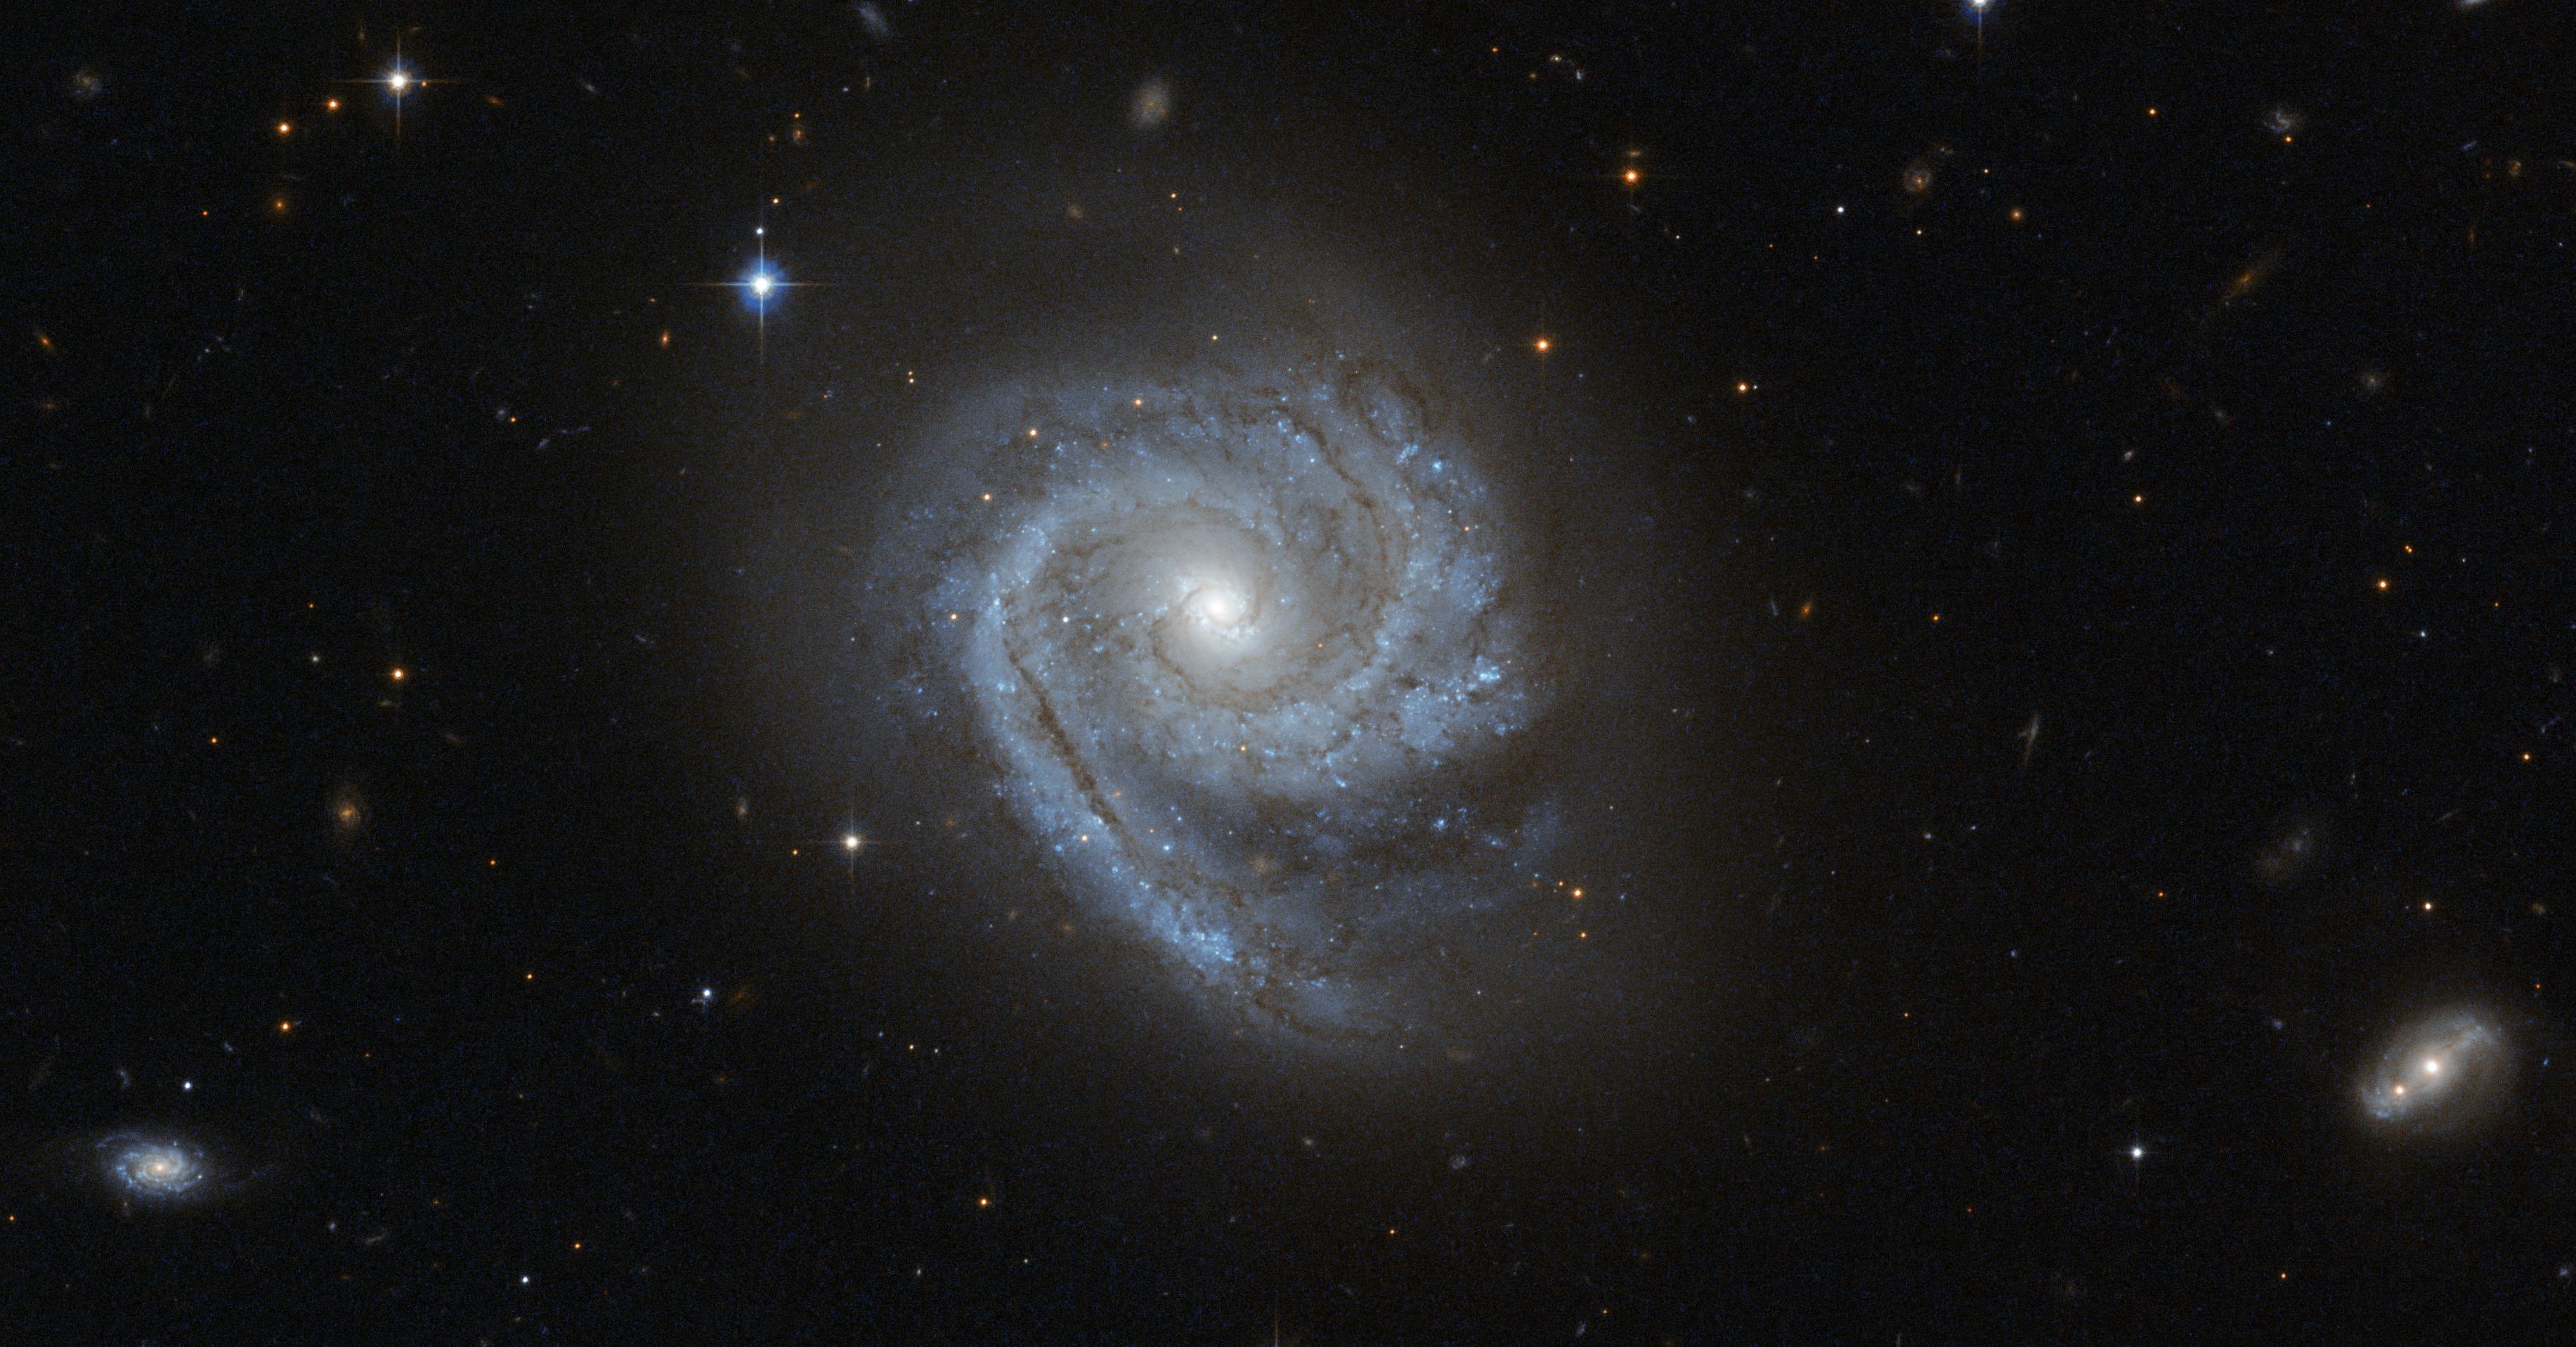 ESO 498-G5